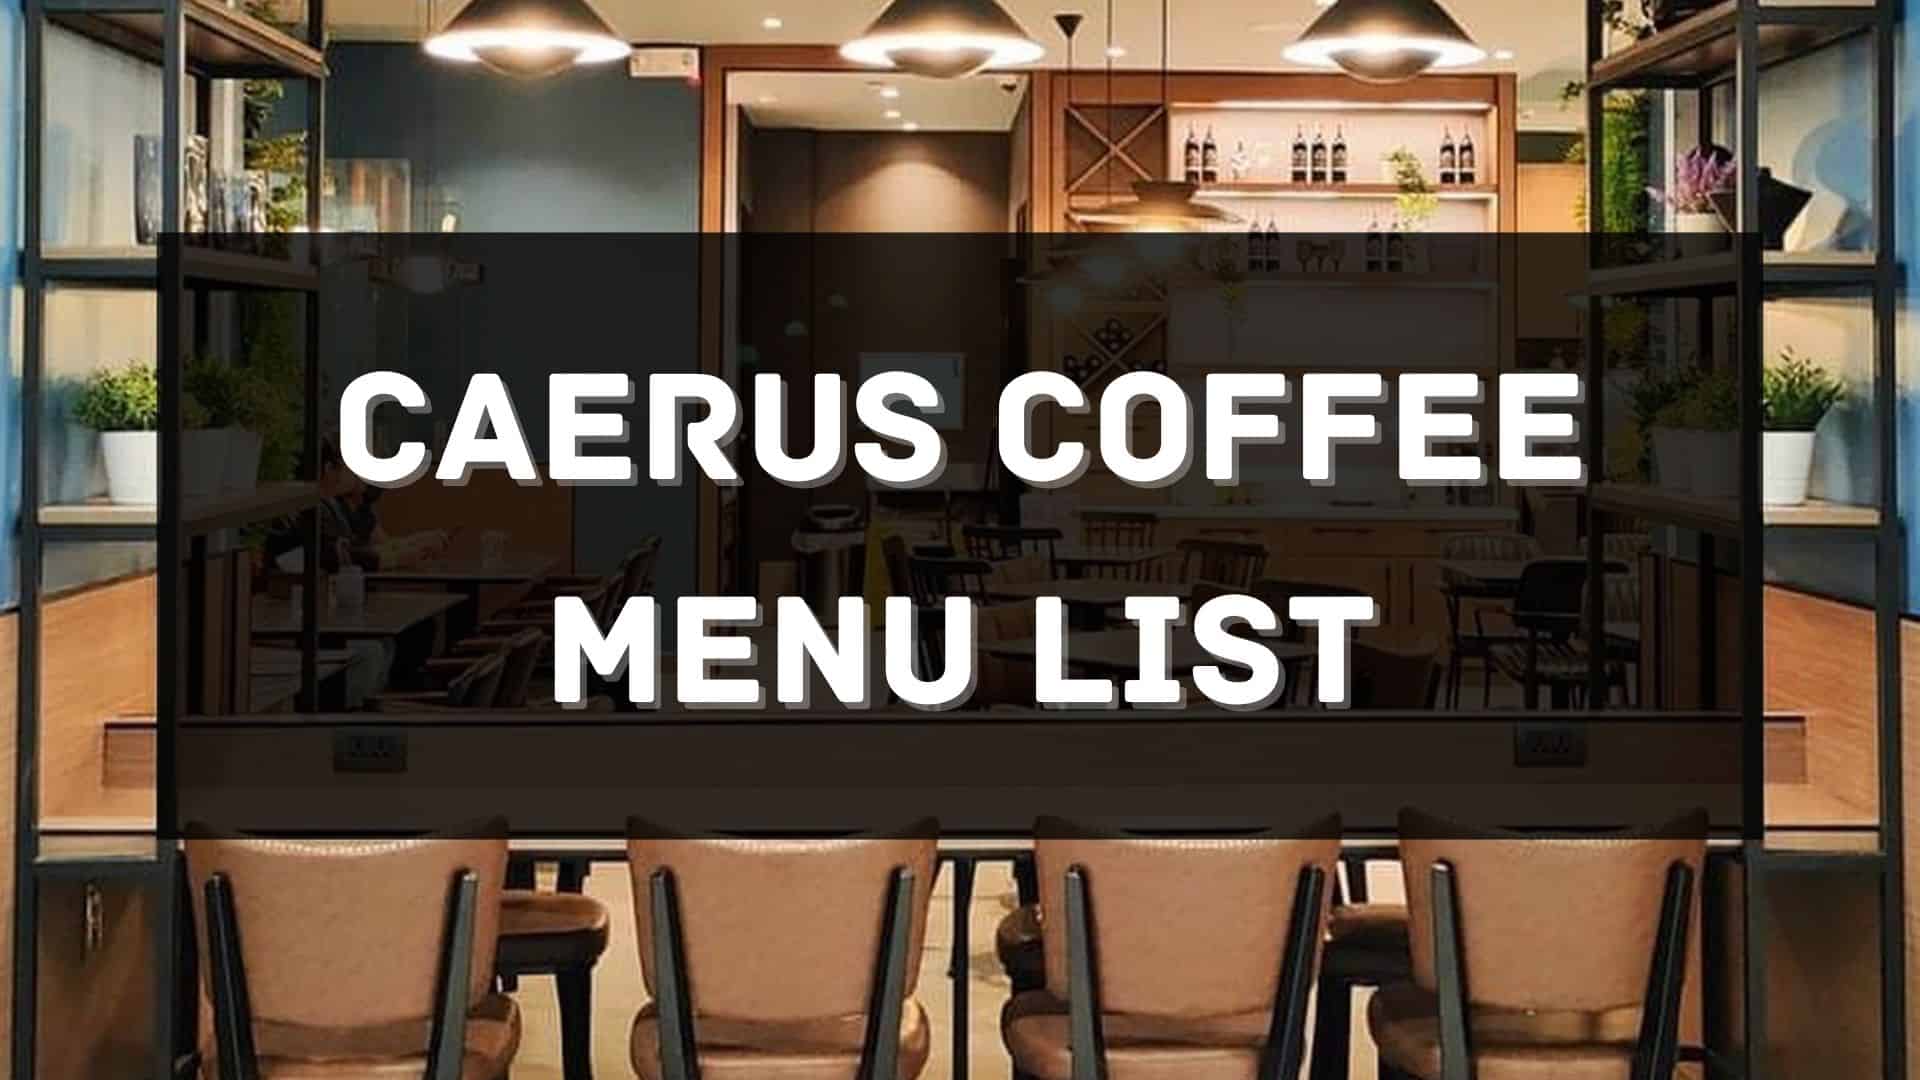 caerus coffee menu prices philippines